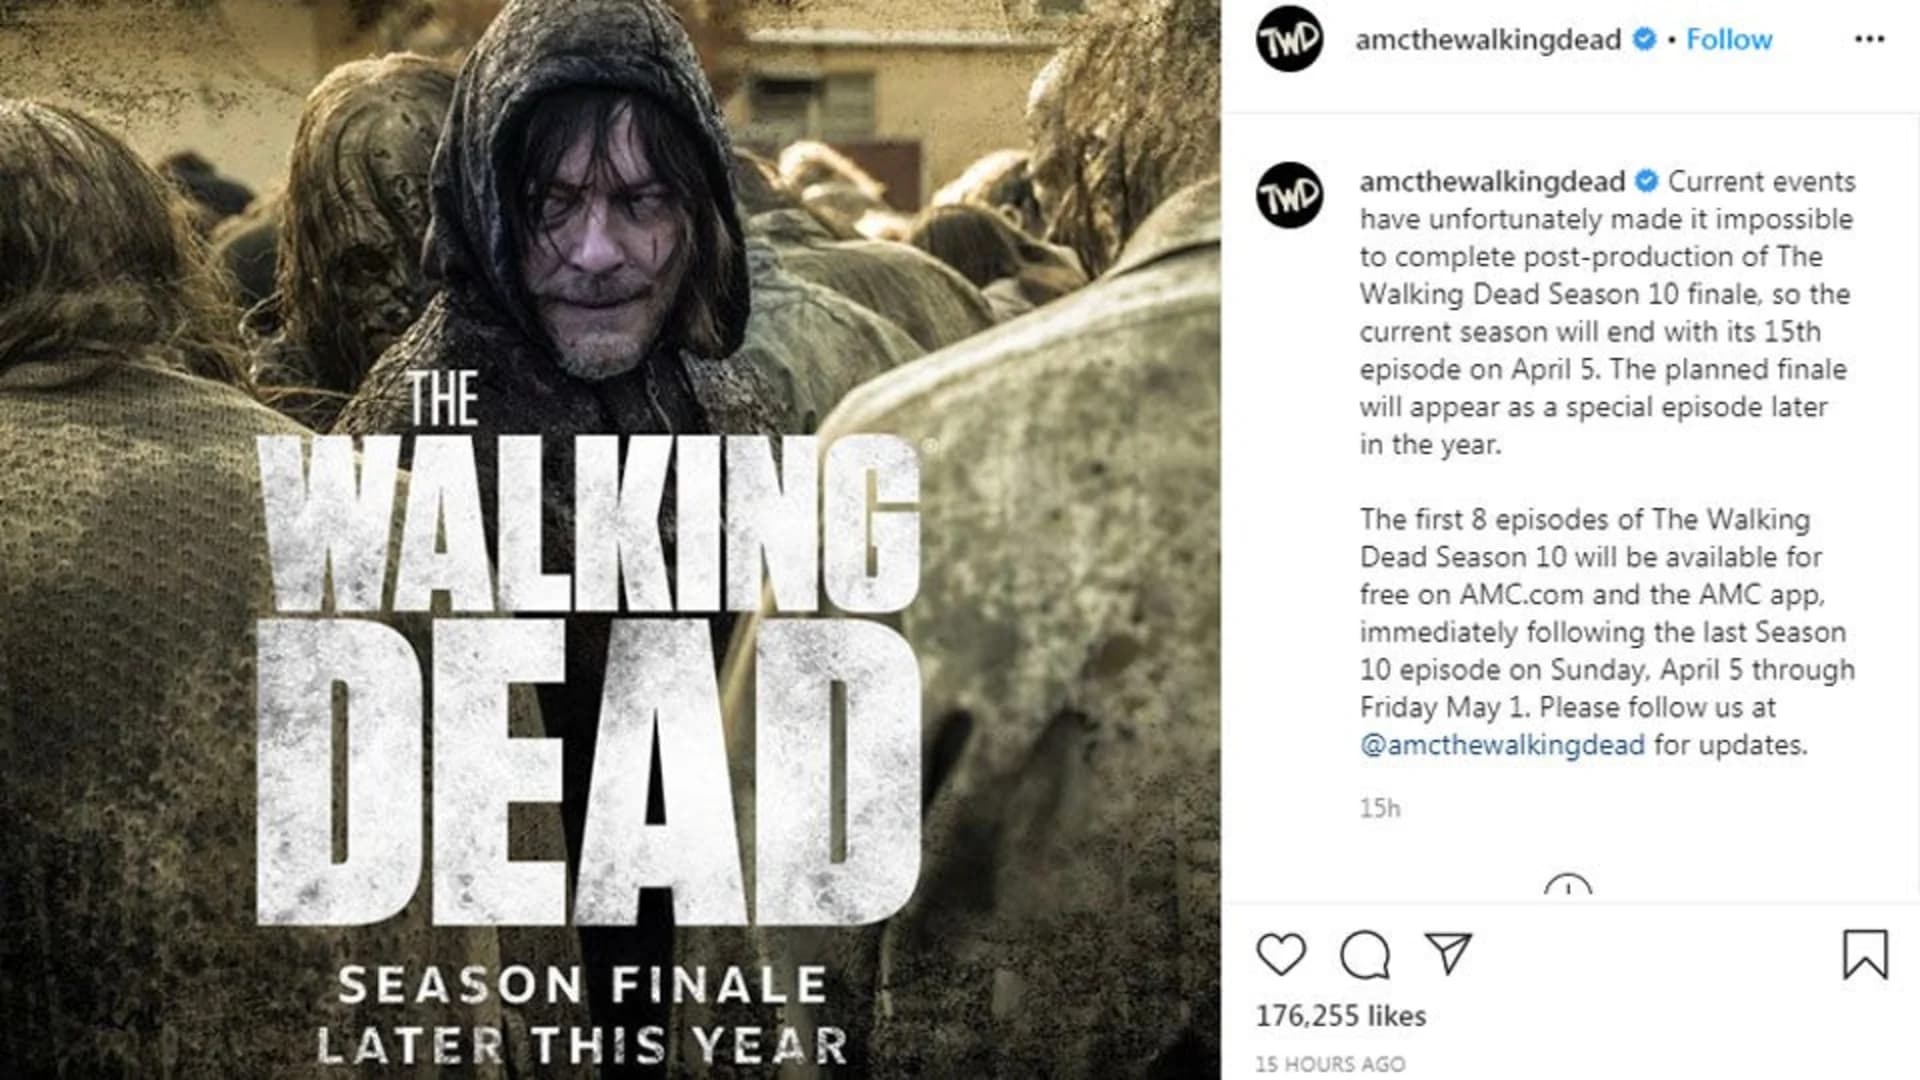 AMC postpones ‘The Walking Dead’ season finale due to coronavirus pandemic